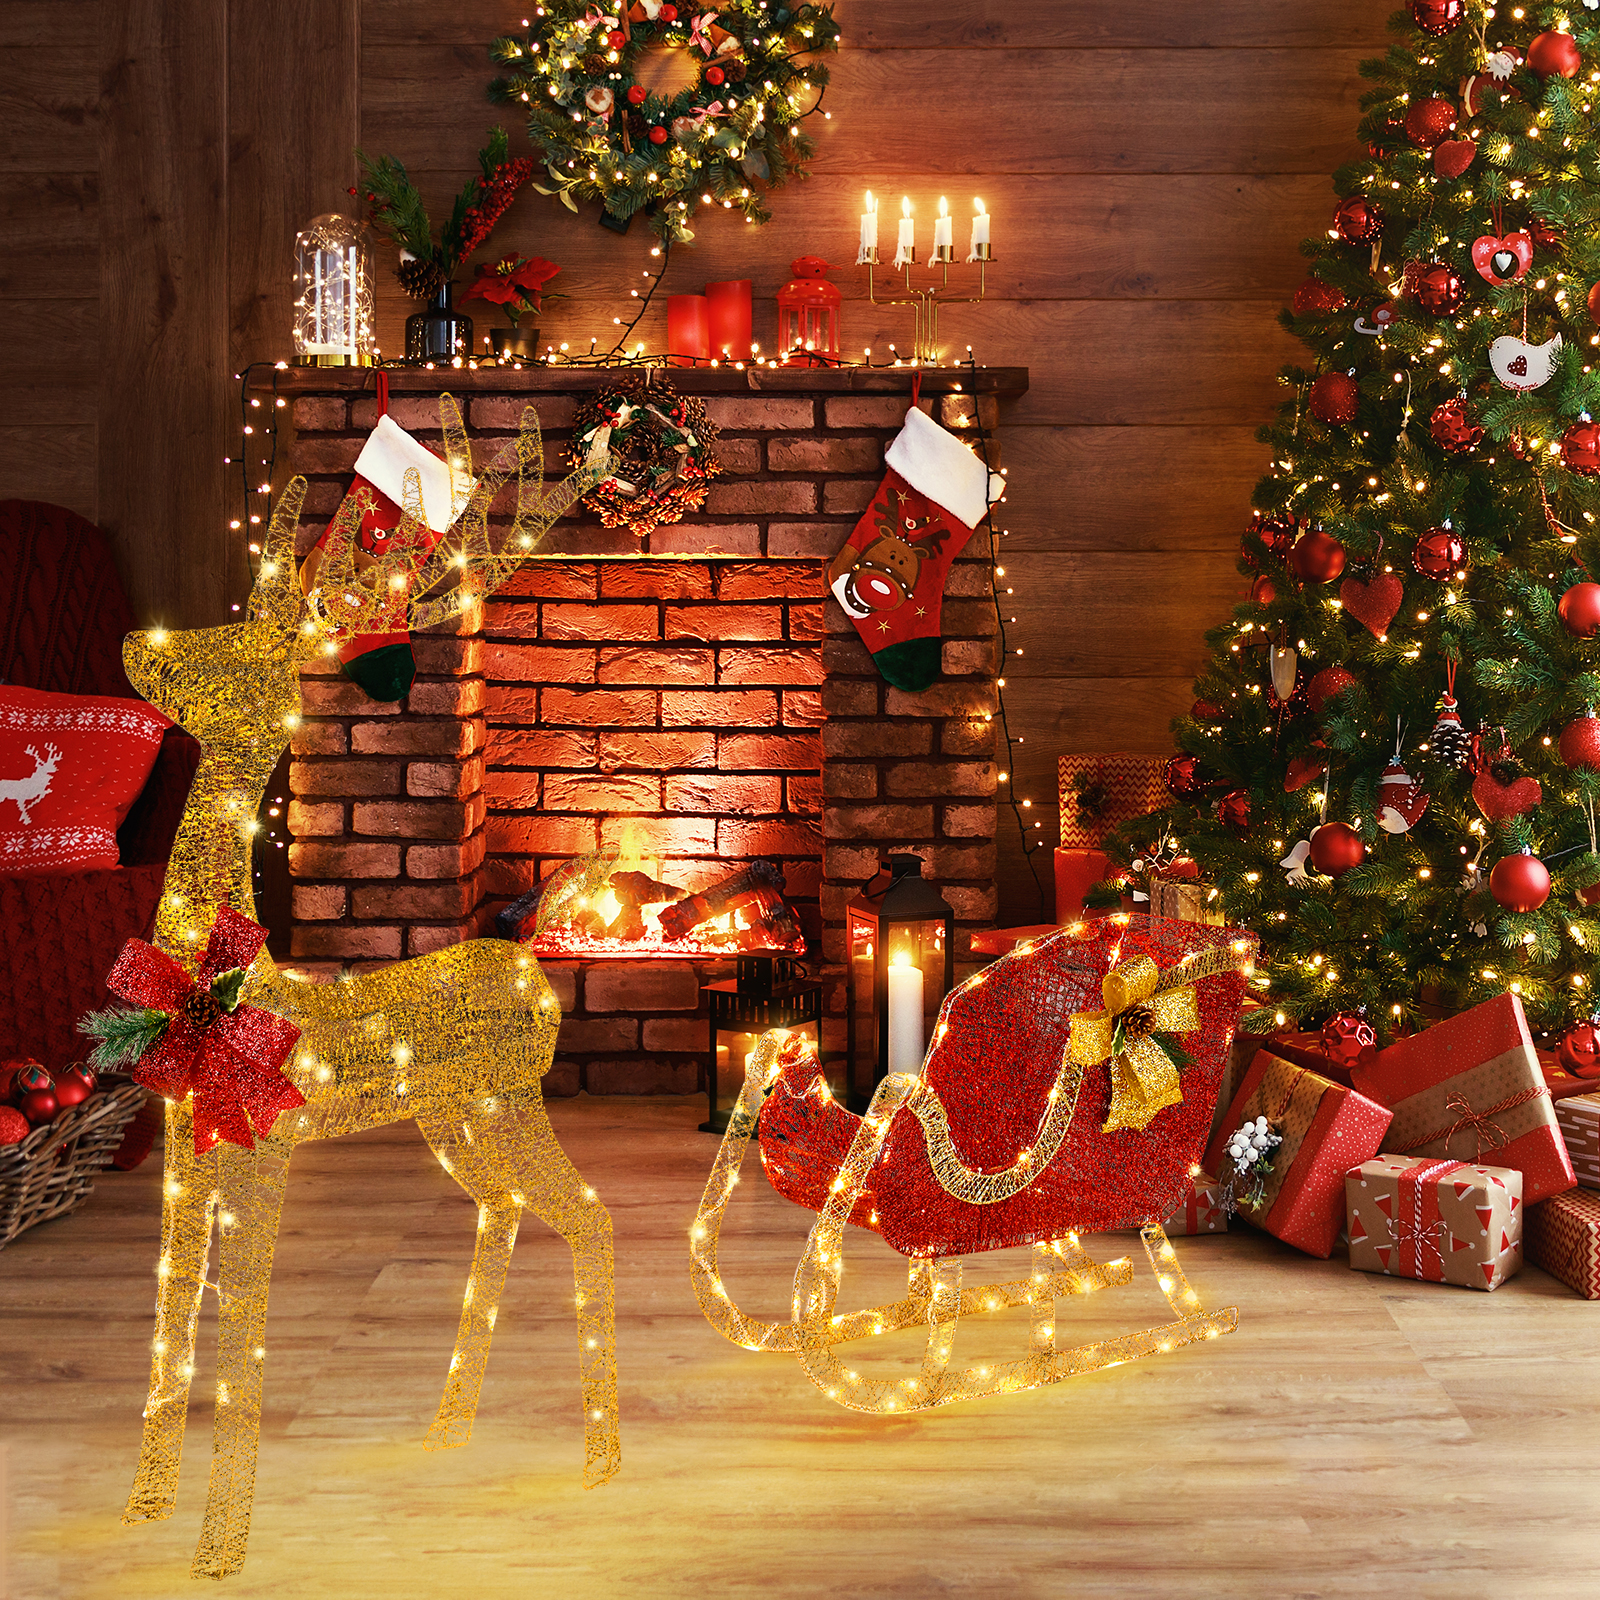 Zimtown Christmas Reindeer Set Outdoor Yard Decoration 4ft Reindeer & Sleigh LED Lights - Golden - image 3 of 9